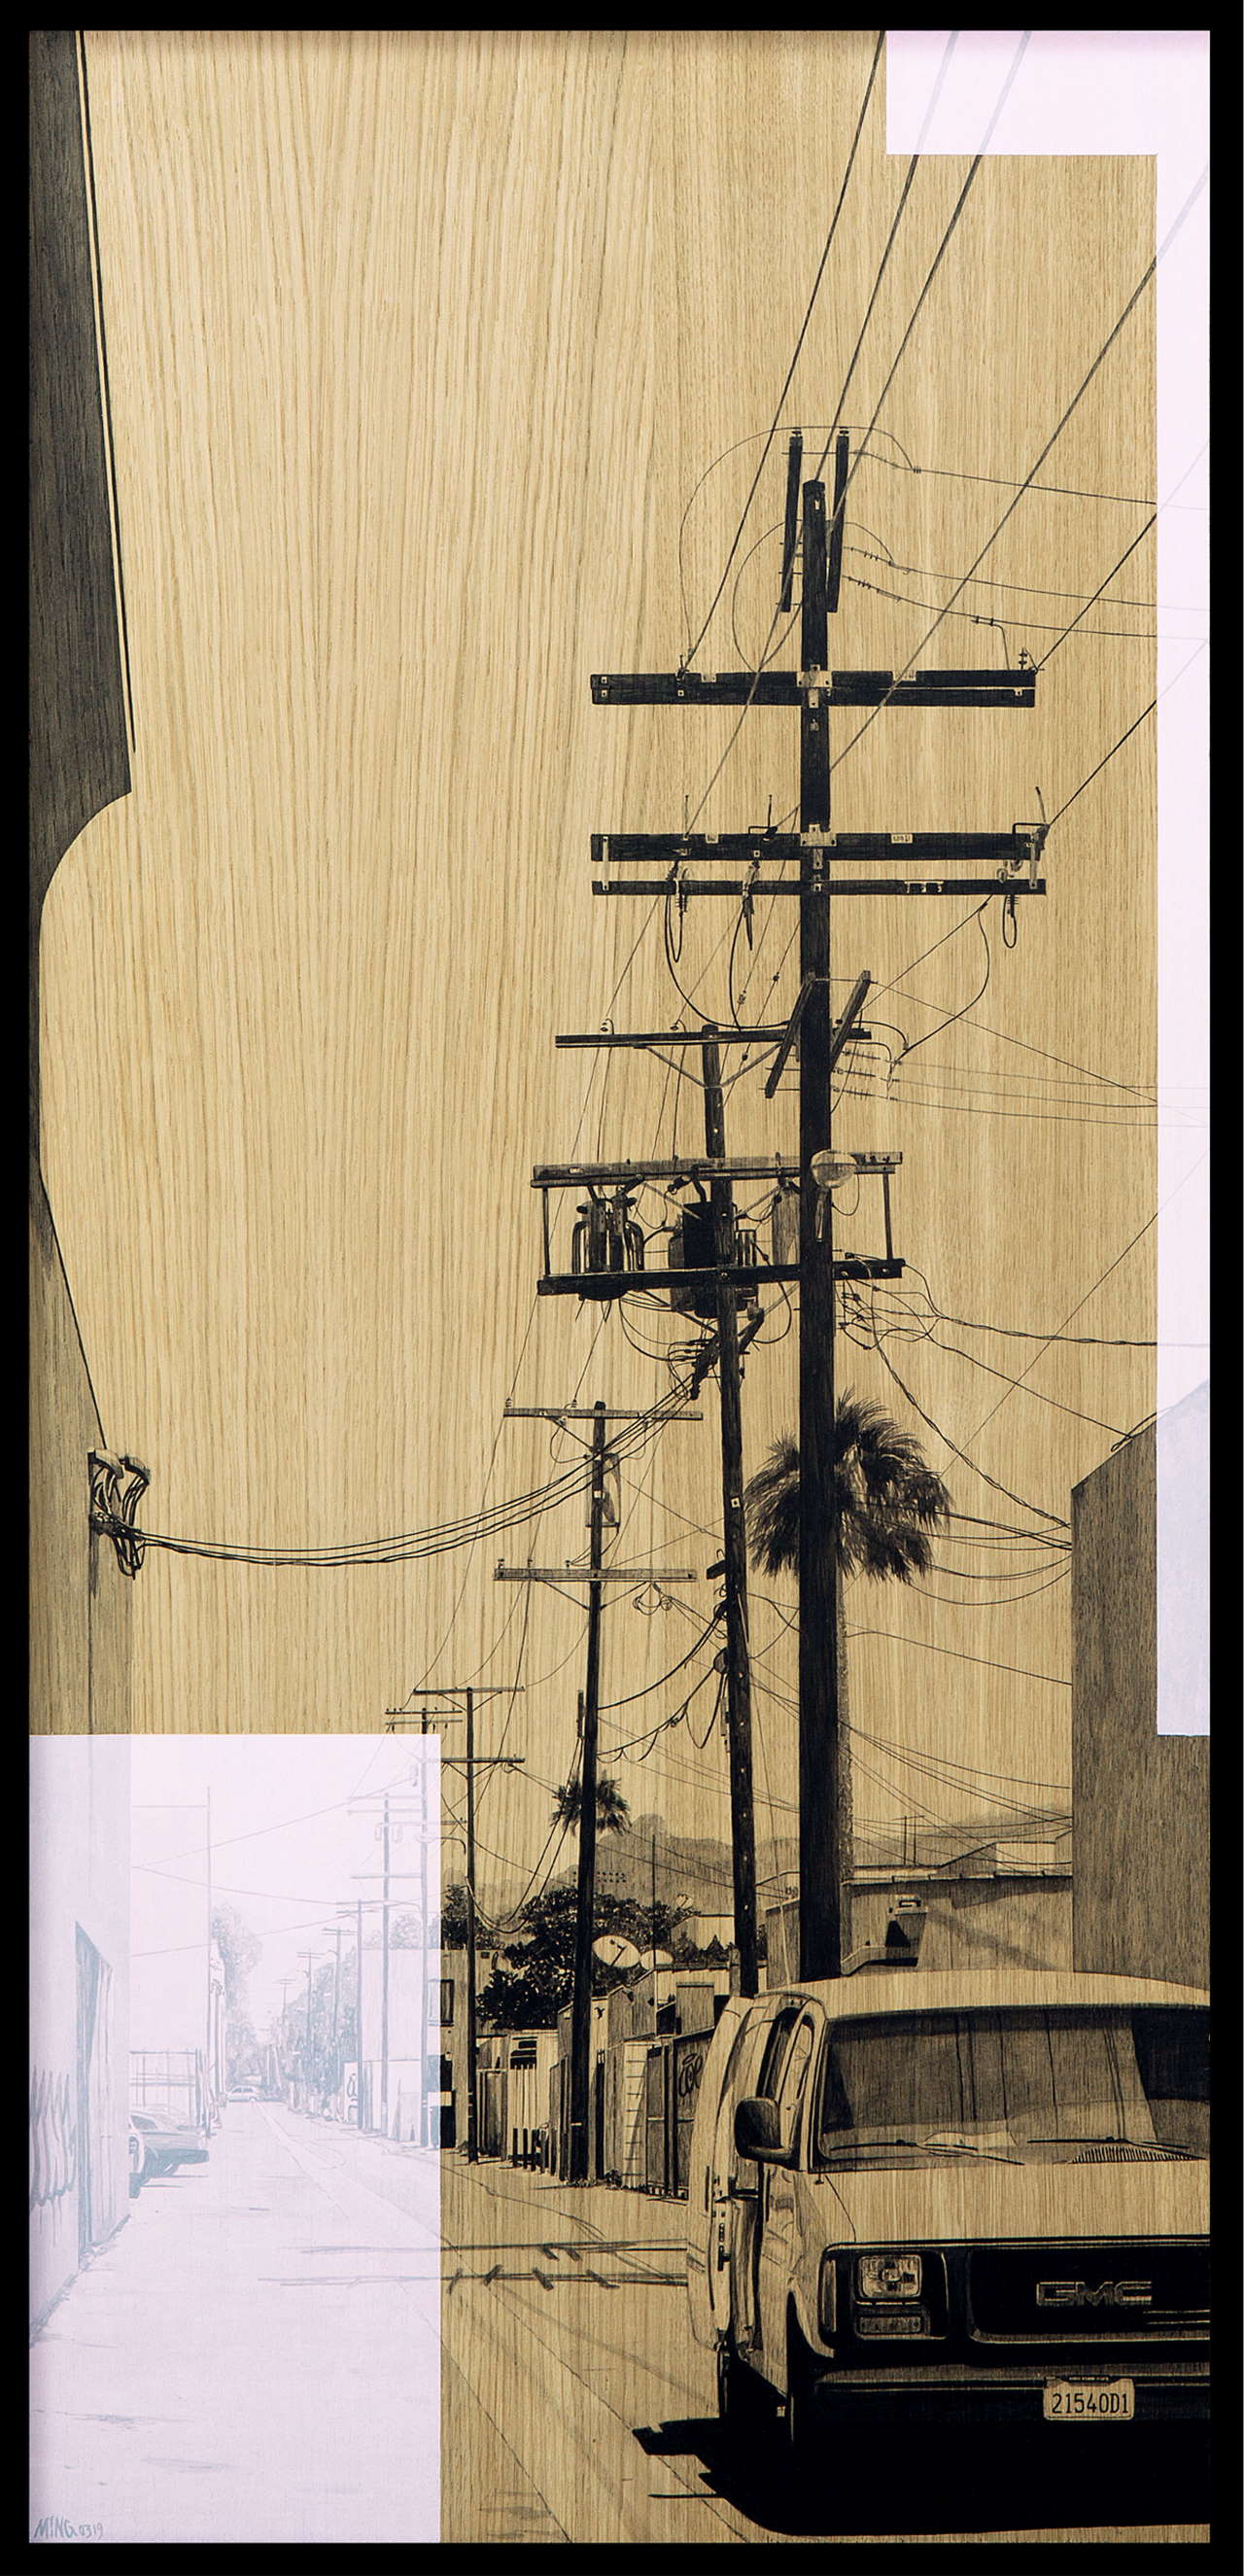 Laurent Minguet, Delivery to LA, 2019. Acrylic oon oak panel, 60 x 128 cm - 2019. © Laurent Minguet.